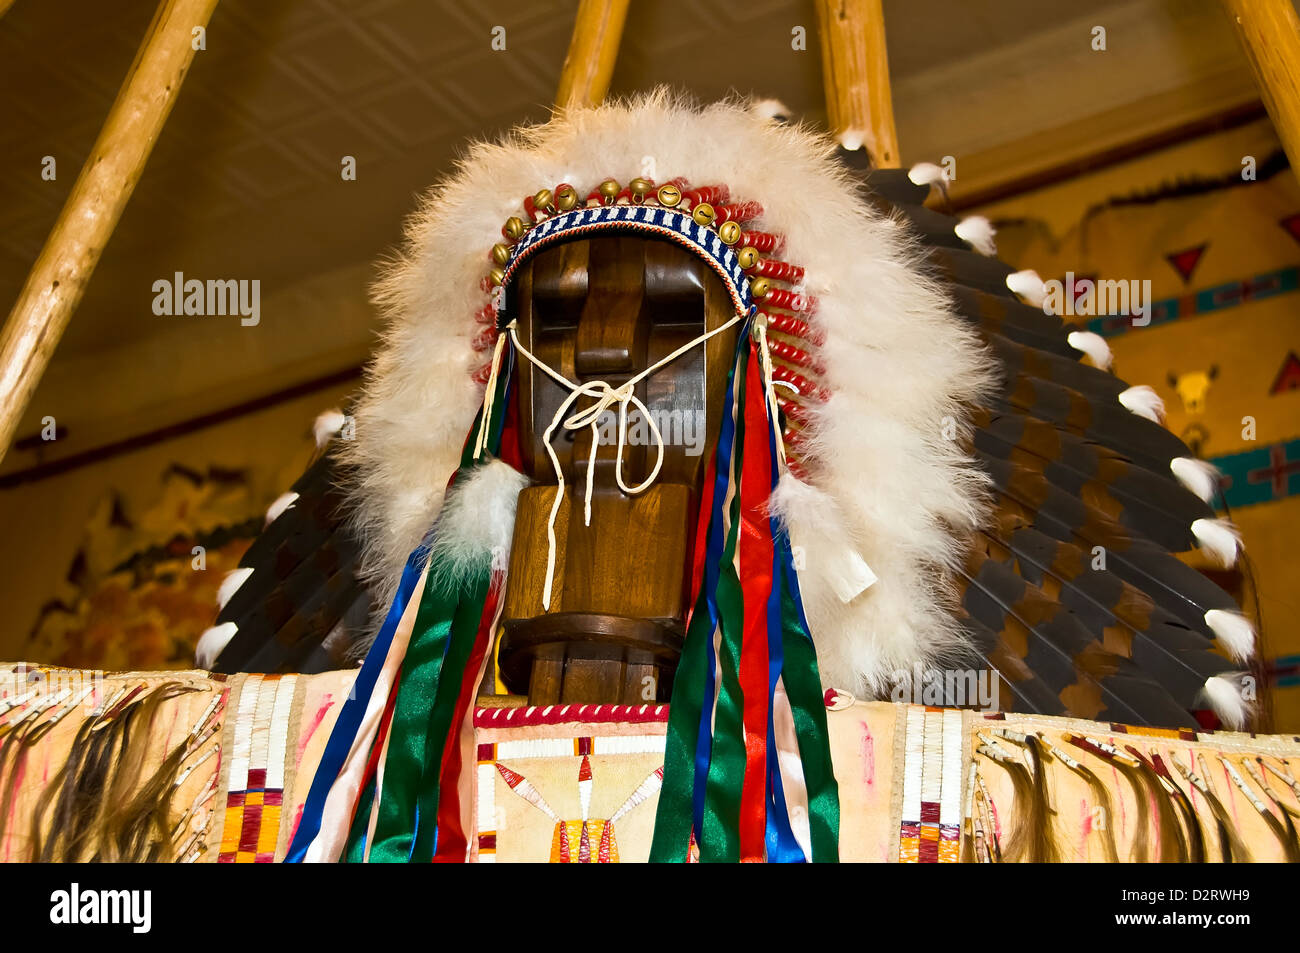 Native American Navajo Indian war bonnet feather headdress being sold as tourist souvenir Rapid City South Dakota Stock Photo